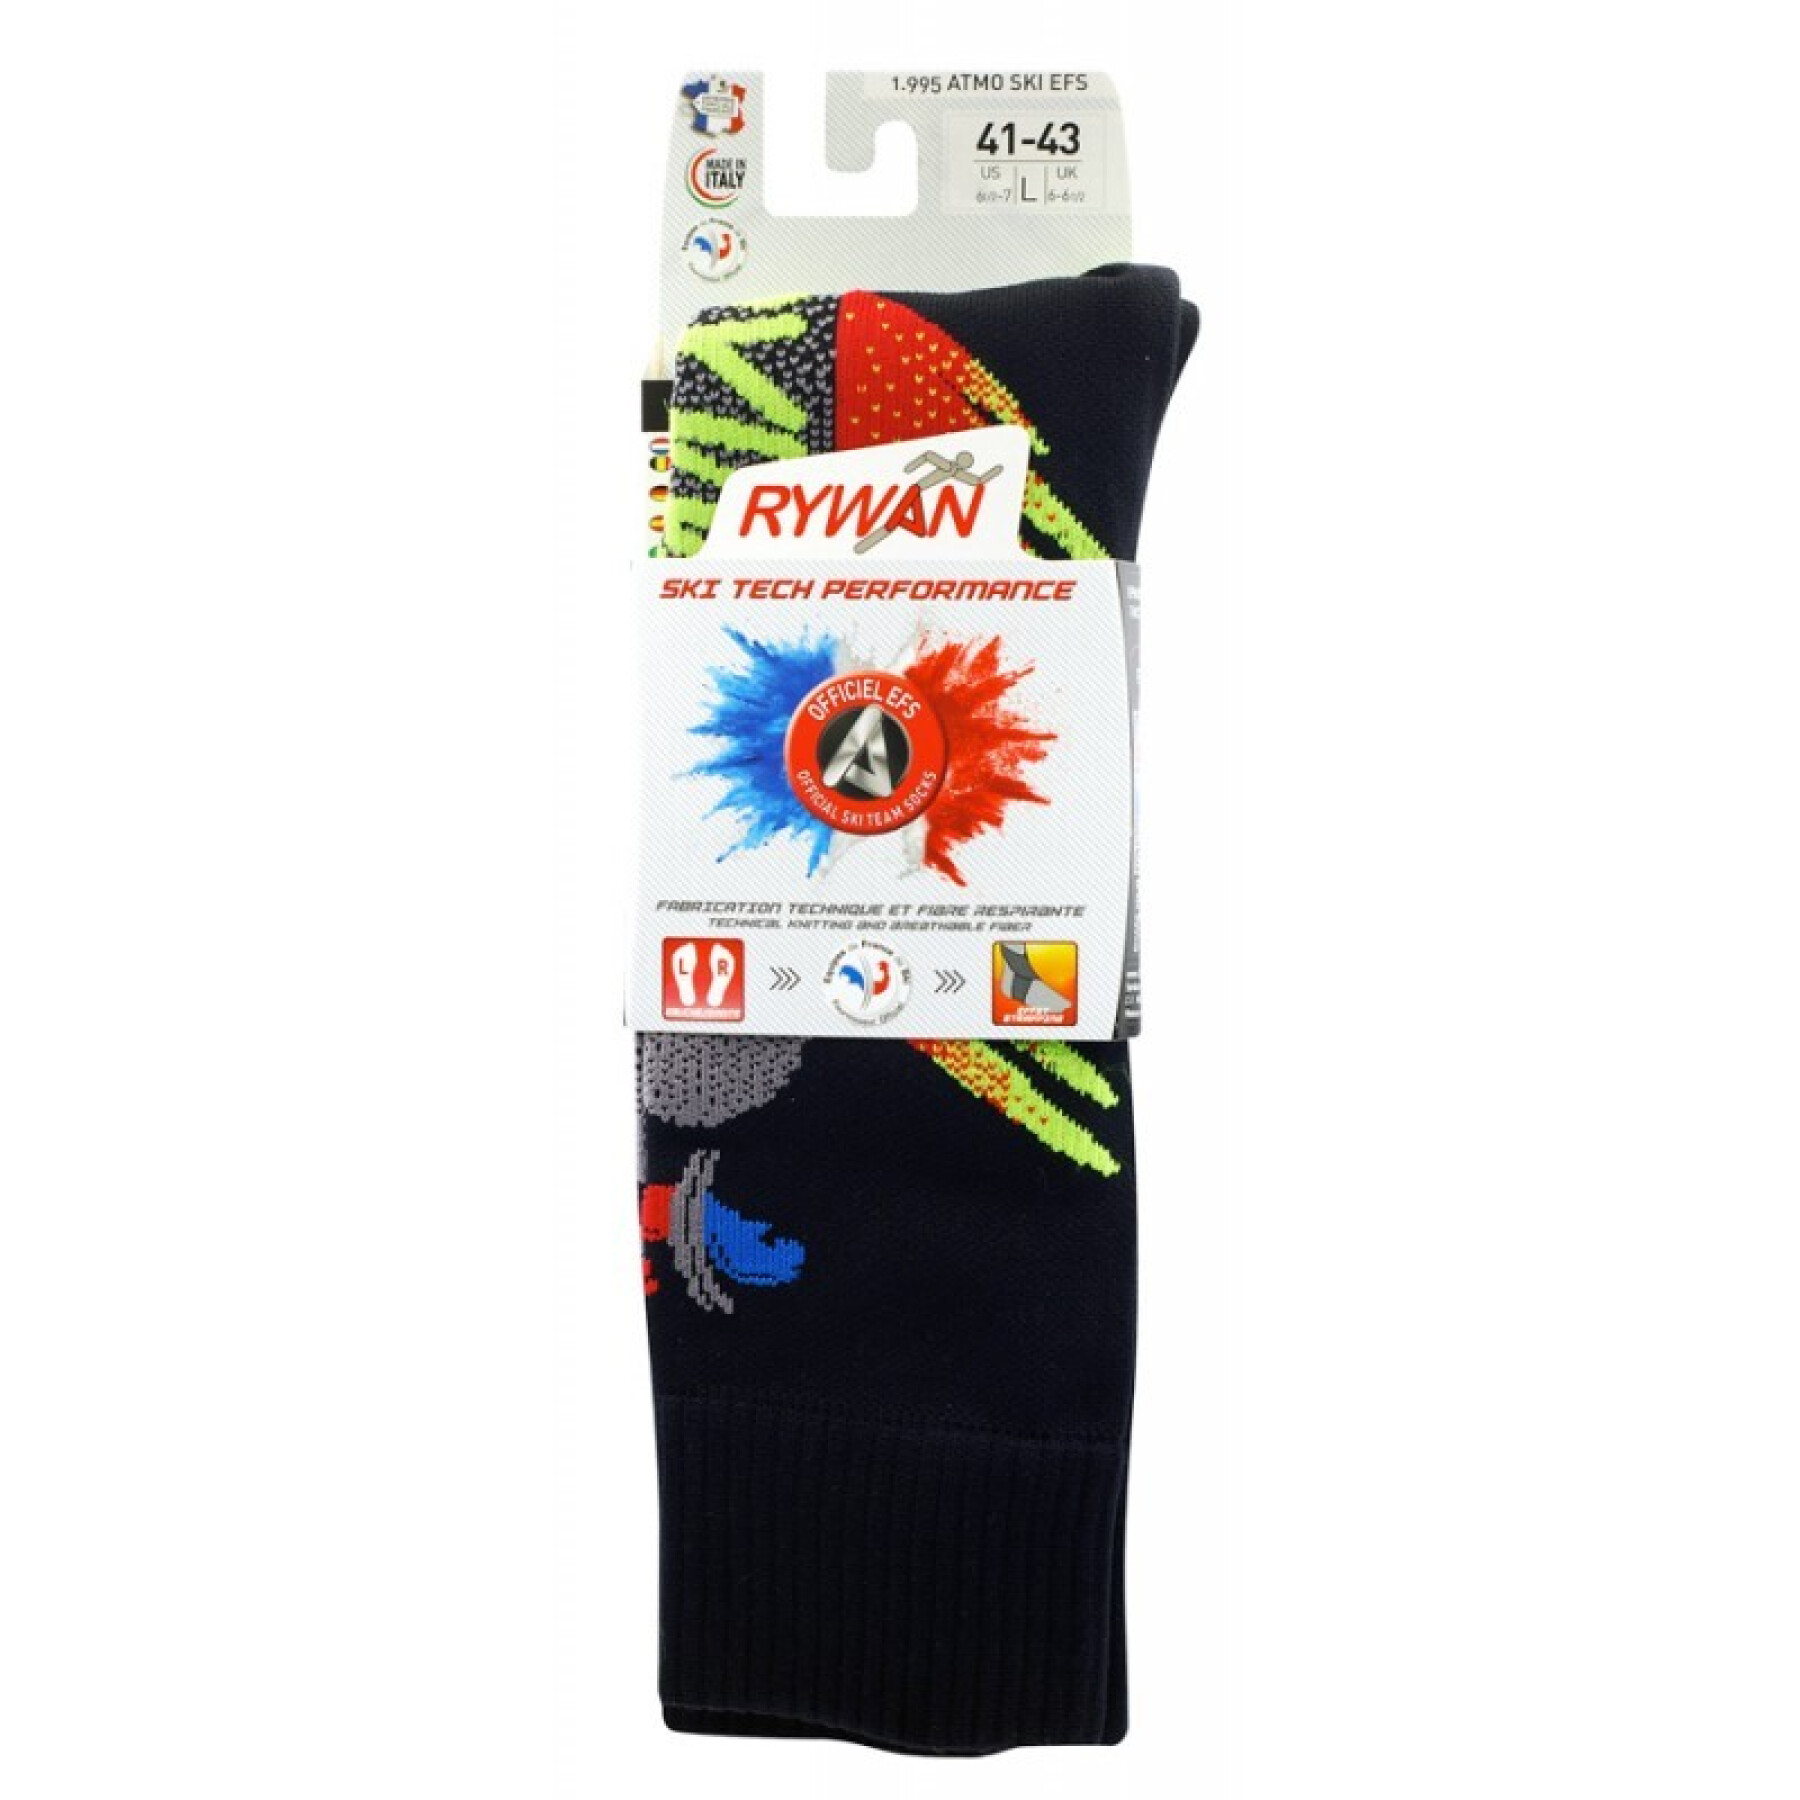 Pair of ski socks Rywan Atmo Pro Climasocks